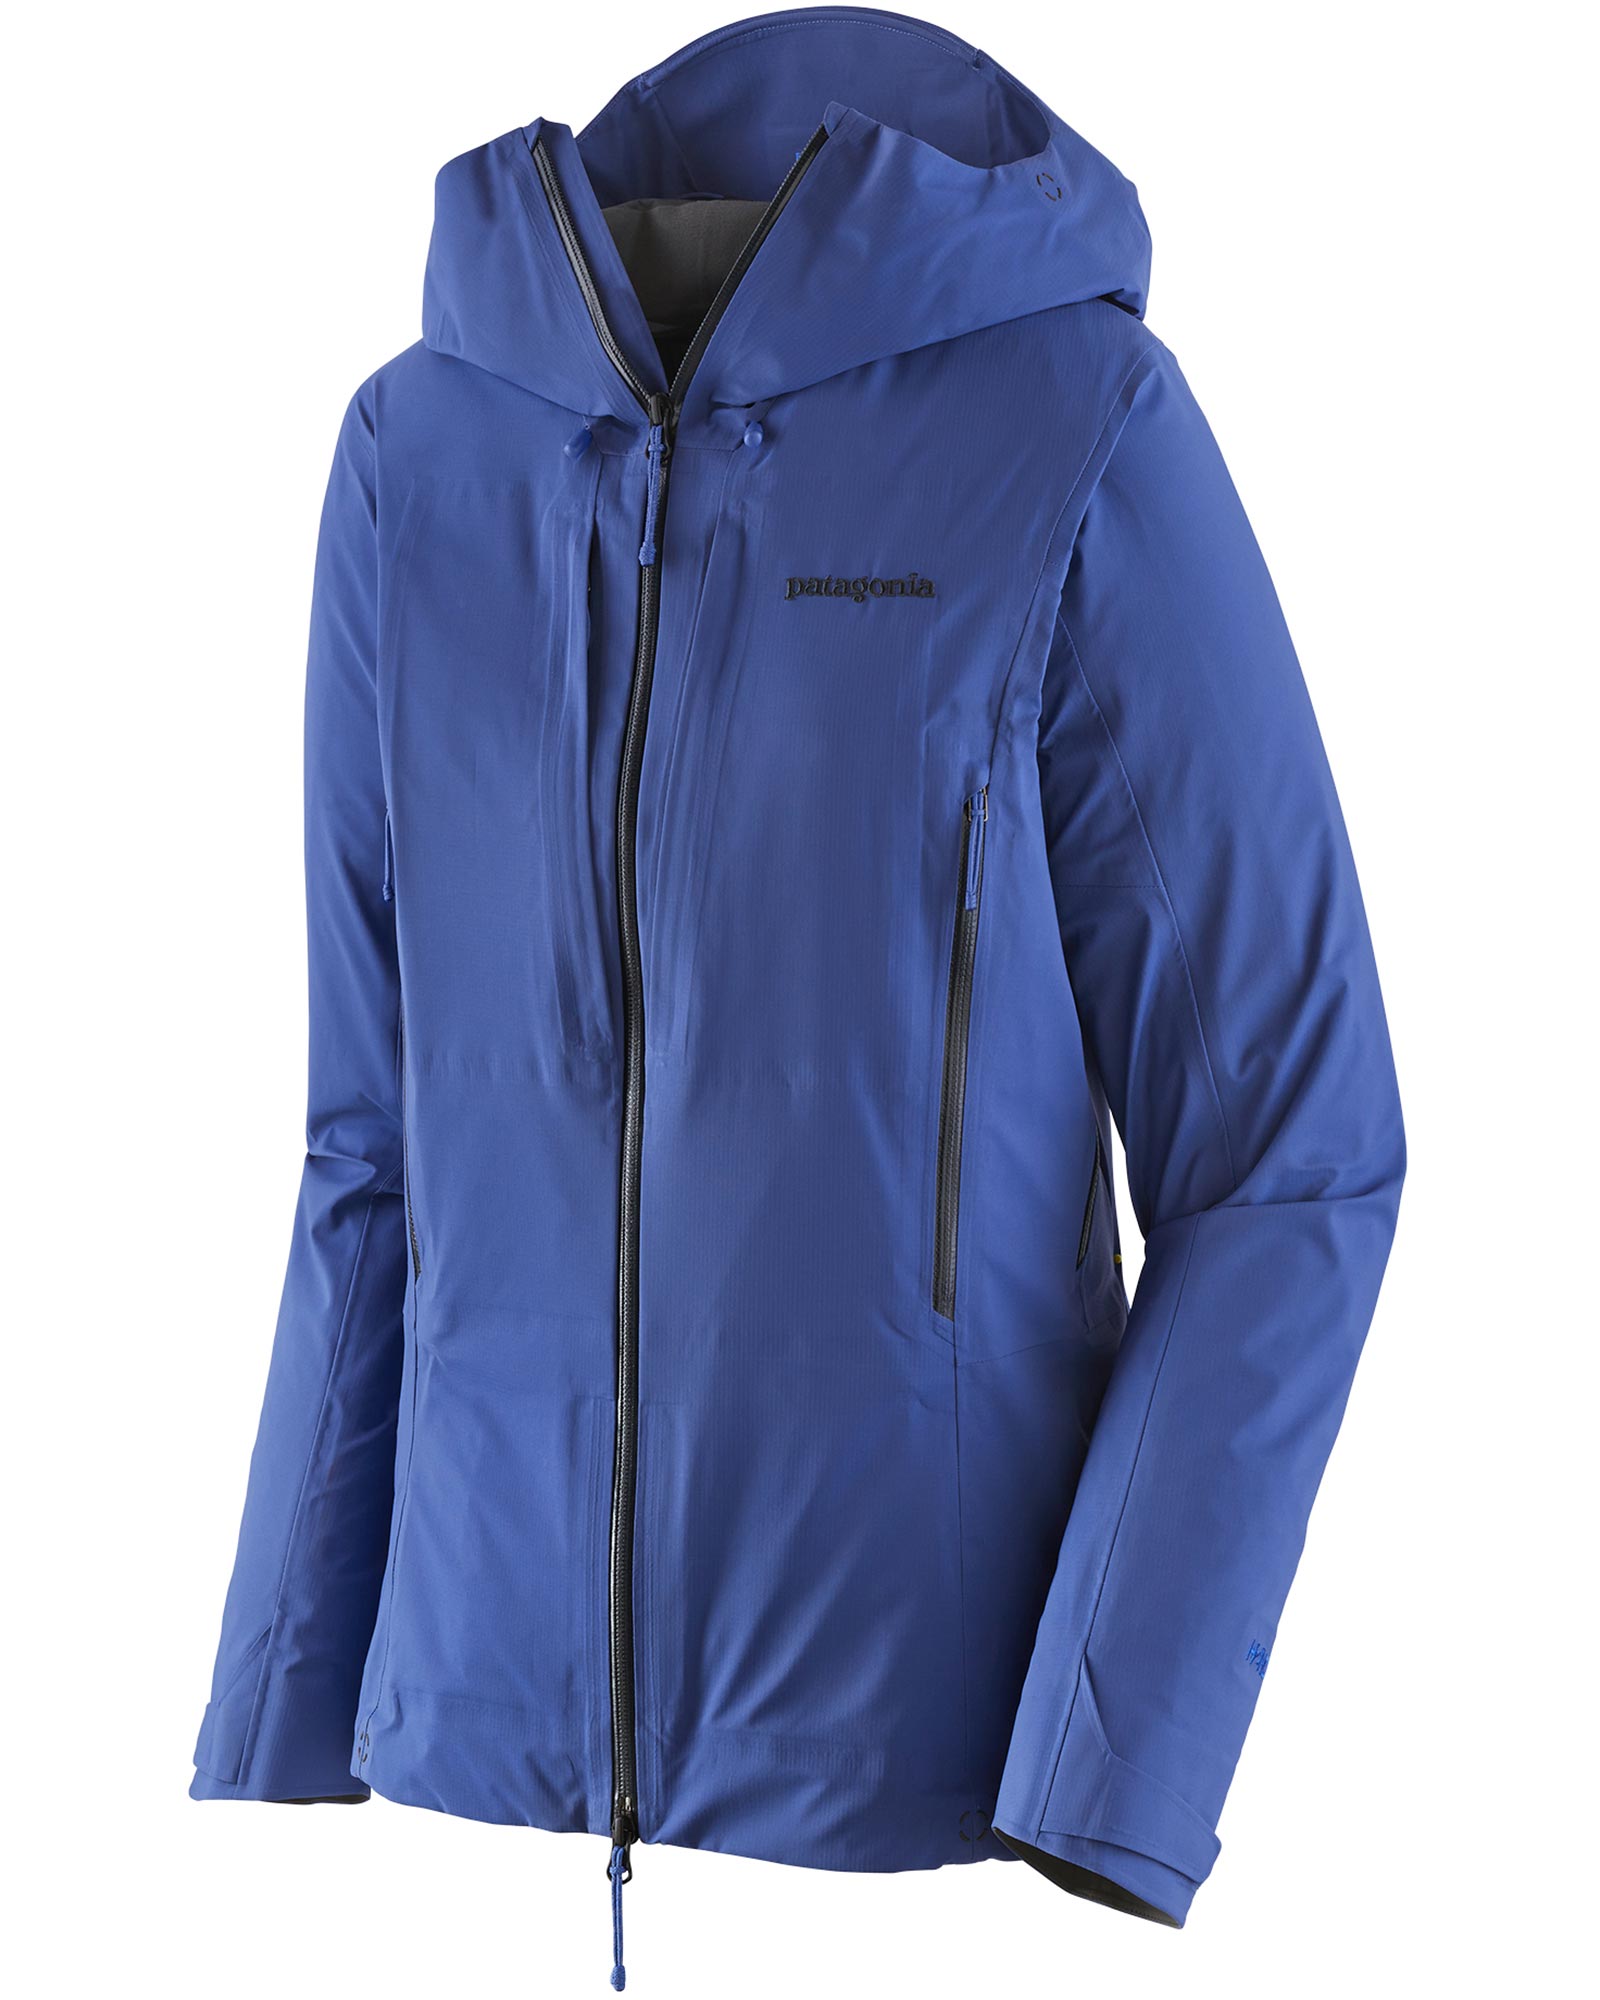 Patagonia Dual Aspect Women’s Jacket - Float Blue XS